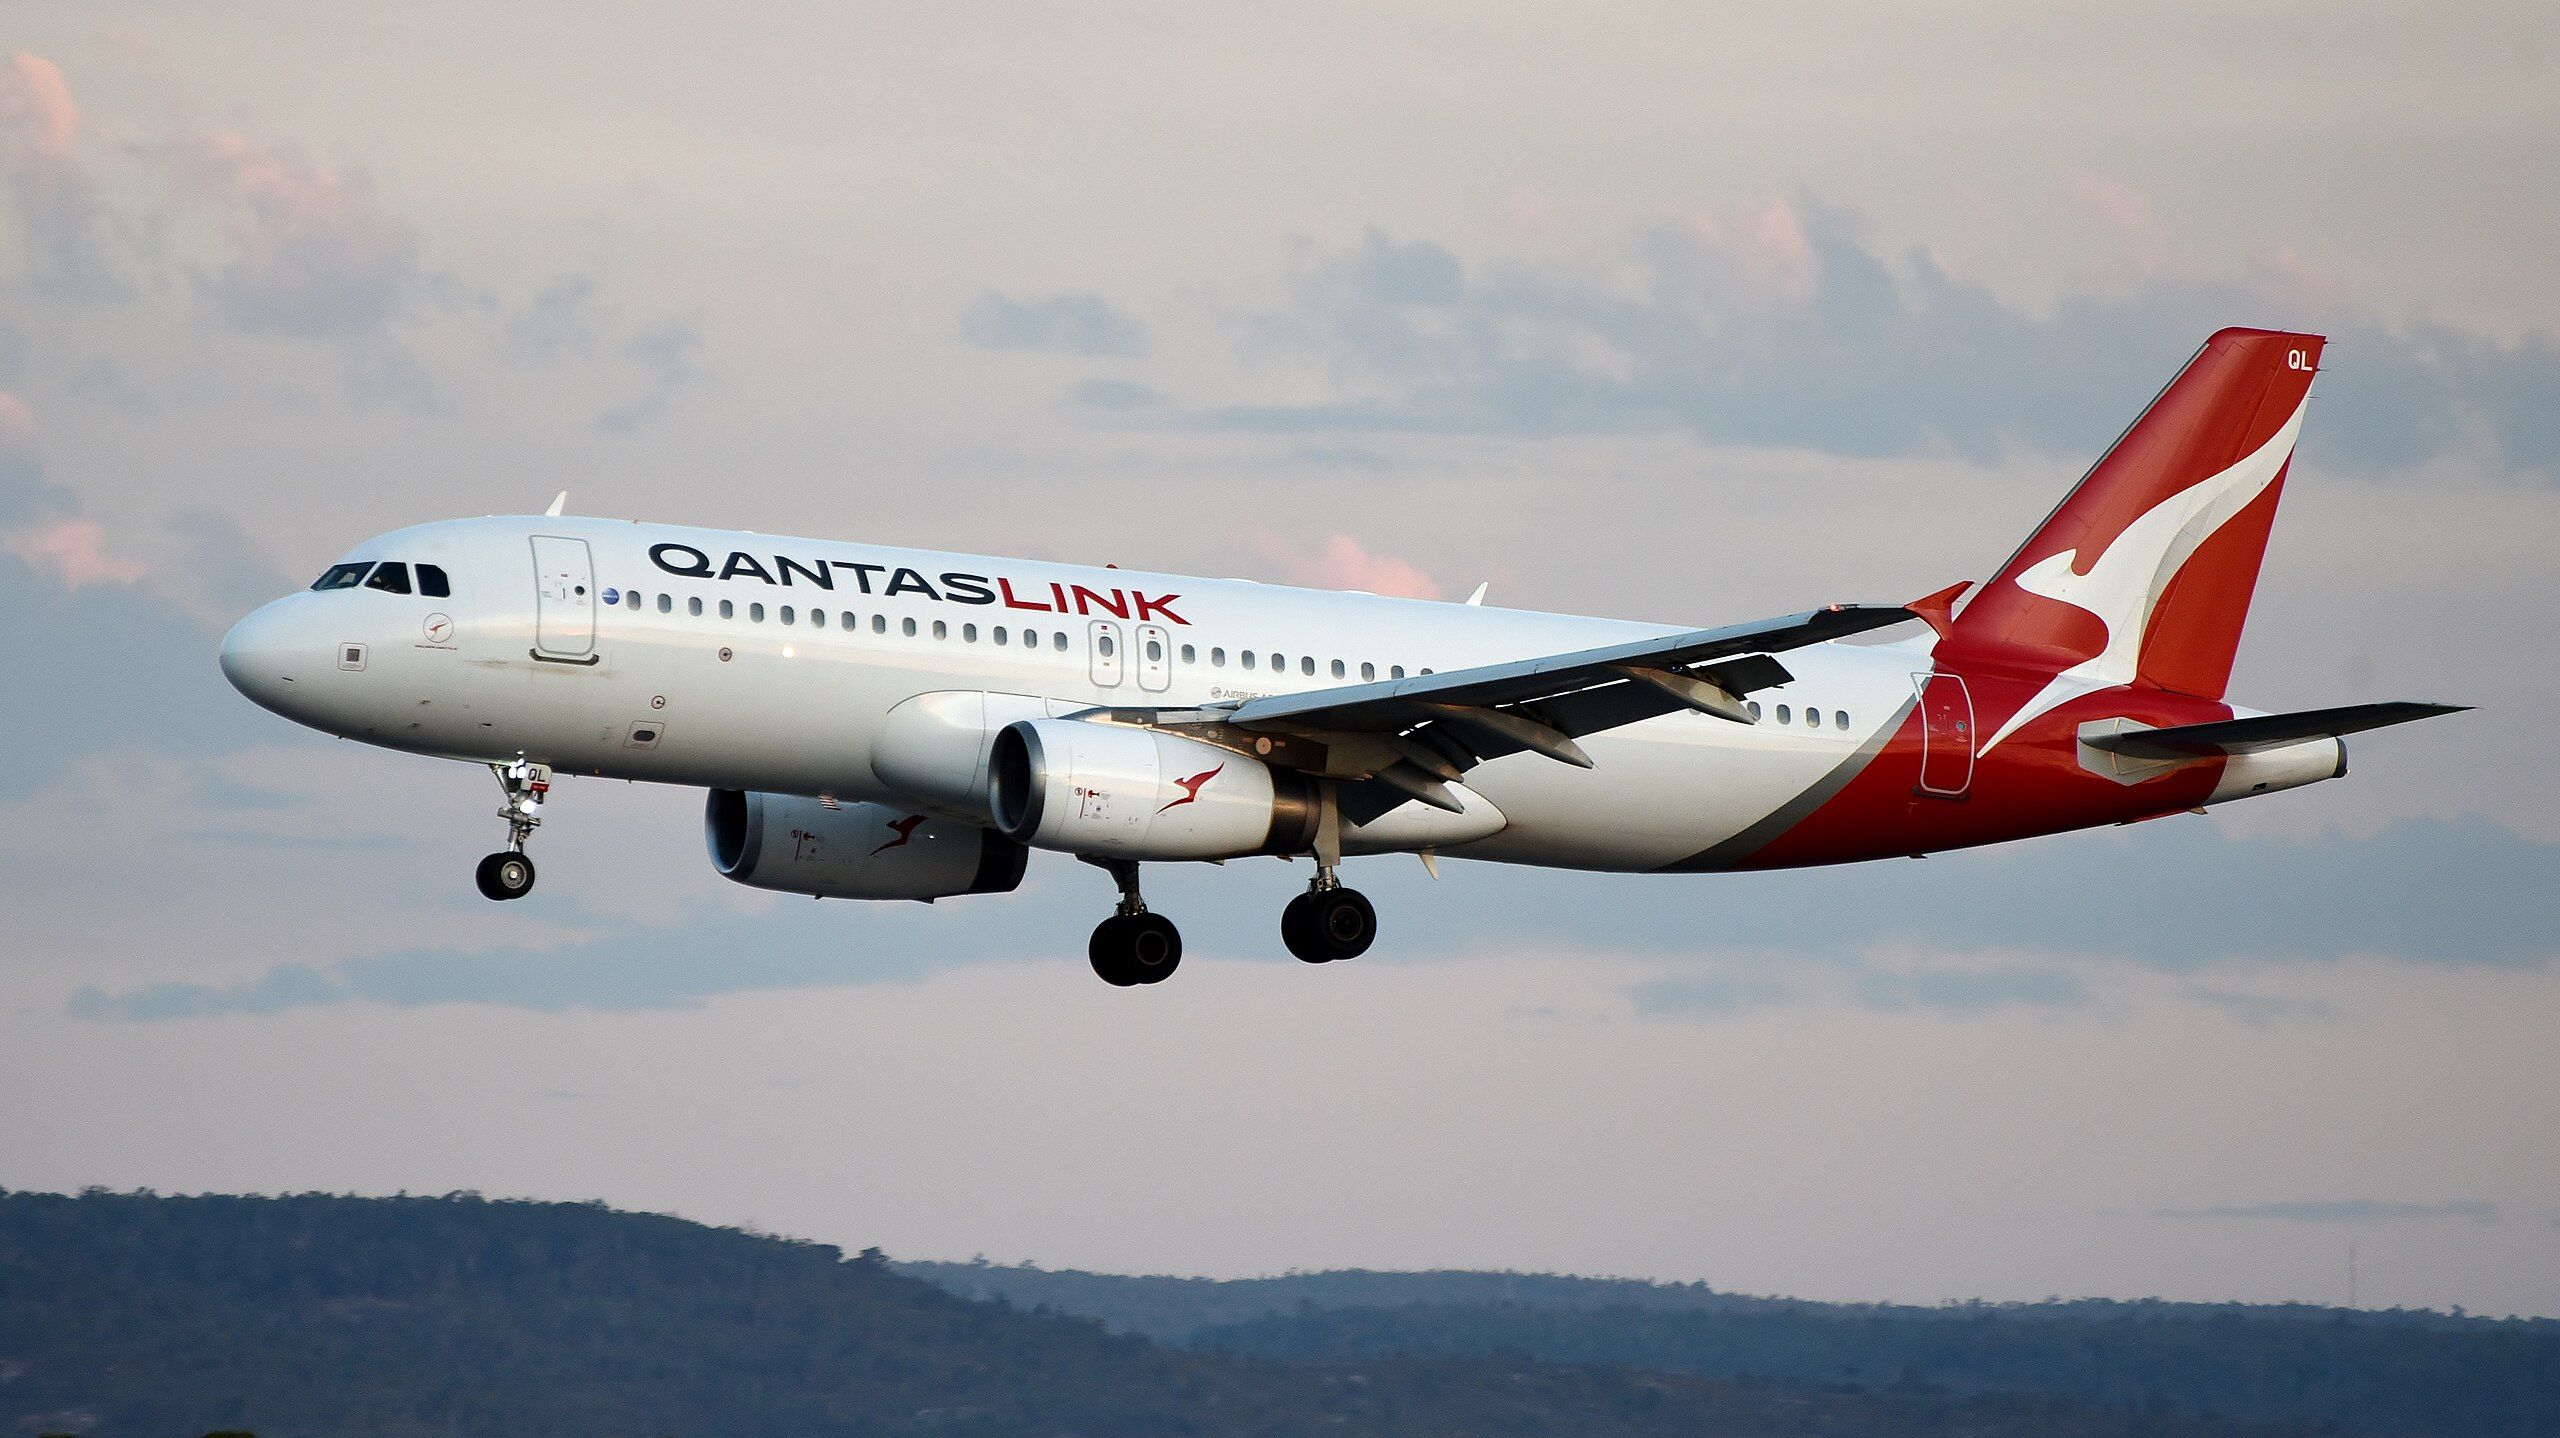 QantasLink A320